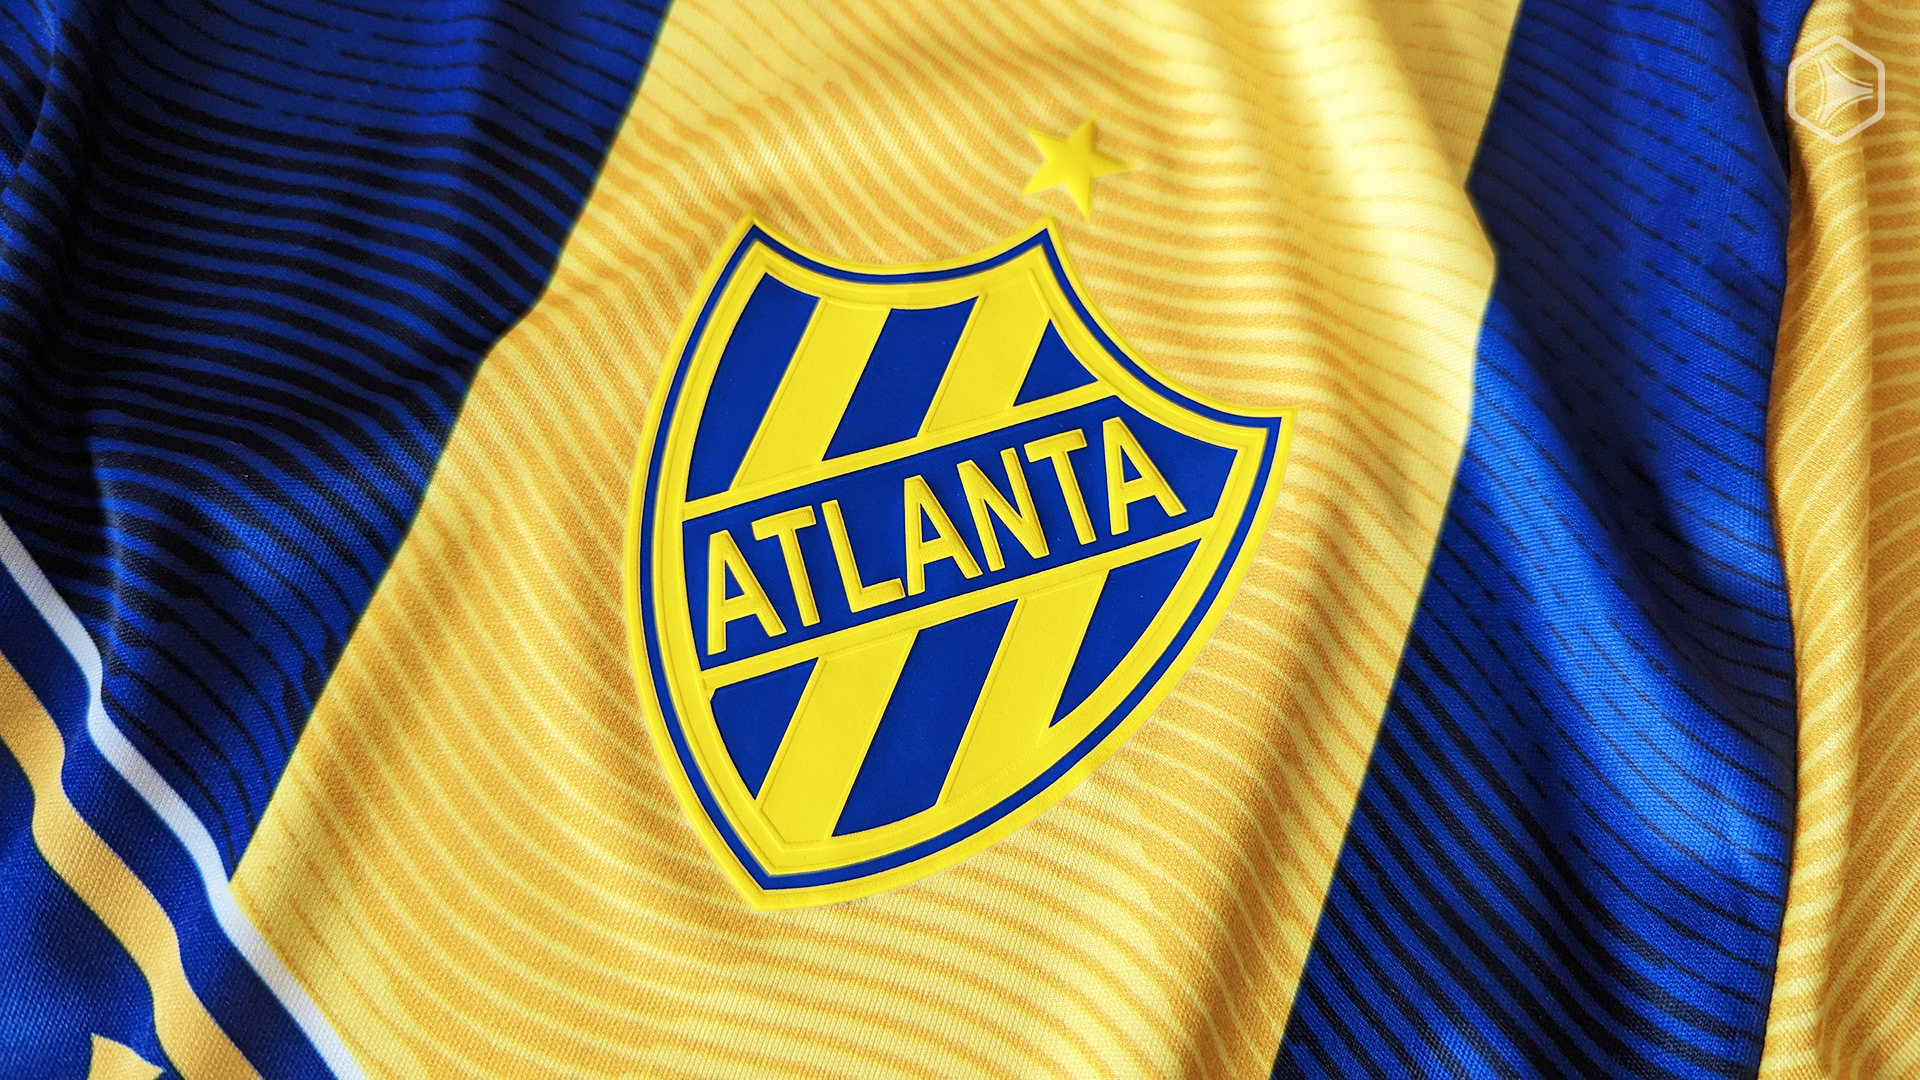 Bienvenido Camiseta de Atlanta, como nuevo Sponsor Institucional